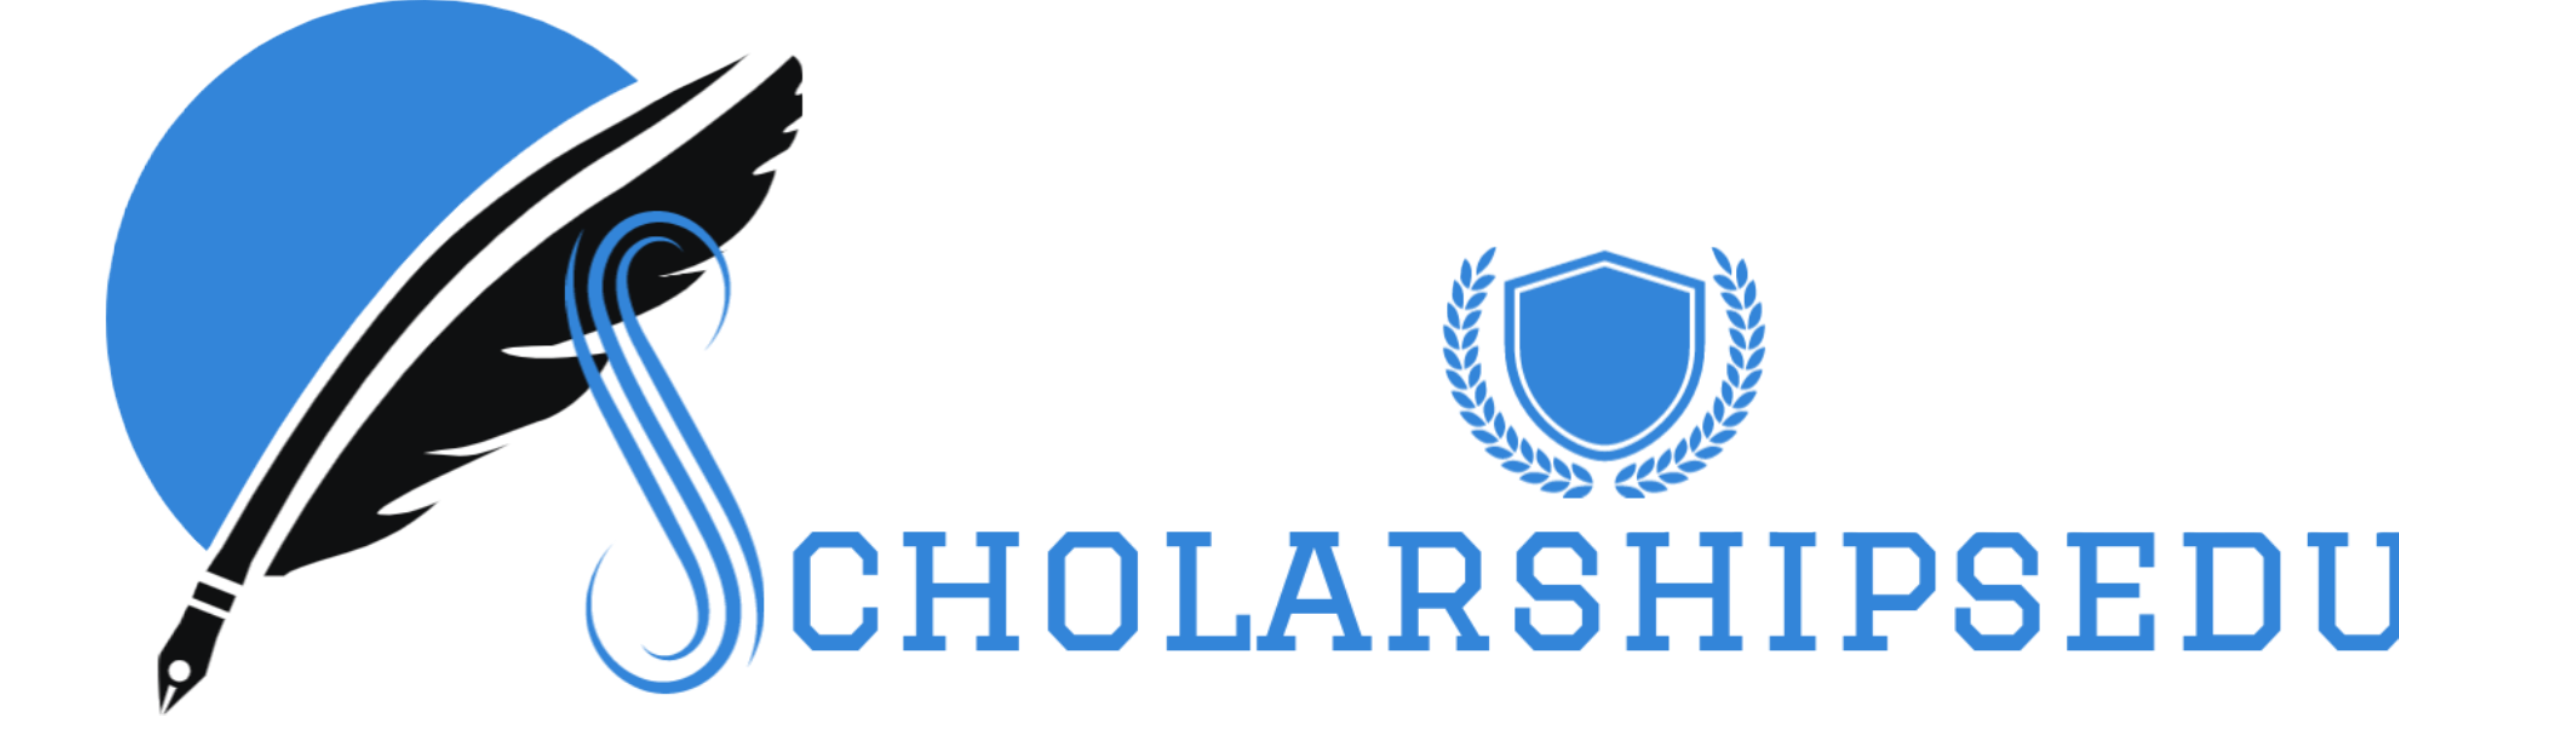 Scholarshipsedu | The key to better education